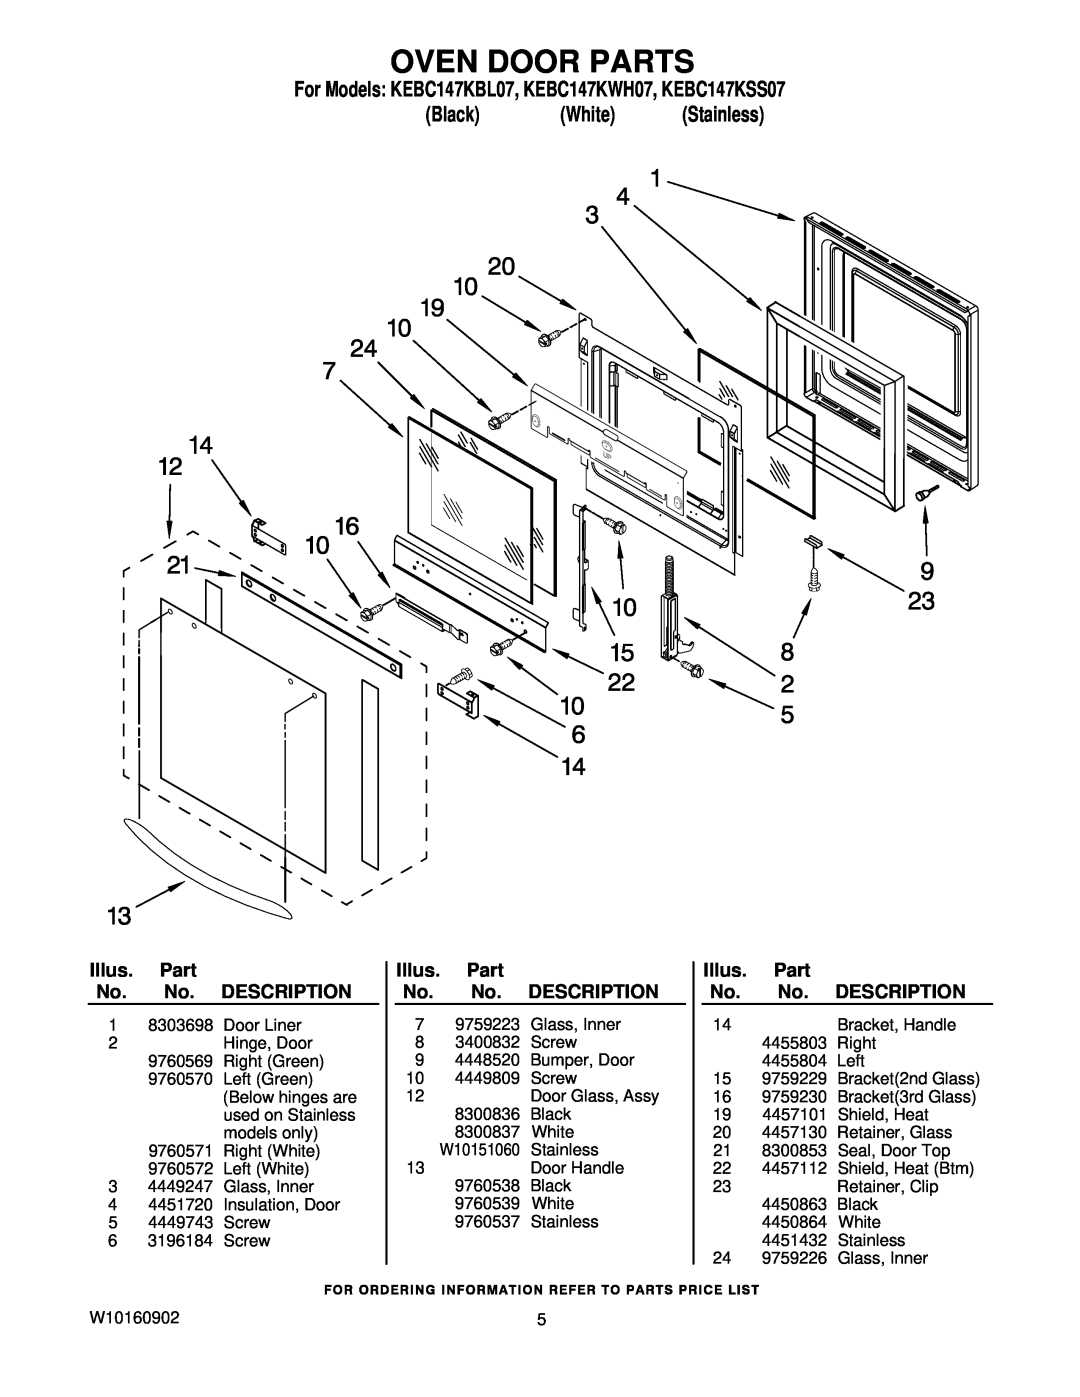 KitchenAid manual Oven Door Parts, For Models KEBC147KBL07, KEBC147KWH07, KEBC147KSS07, Black White Stainless 